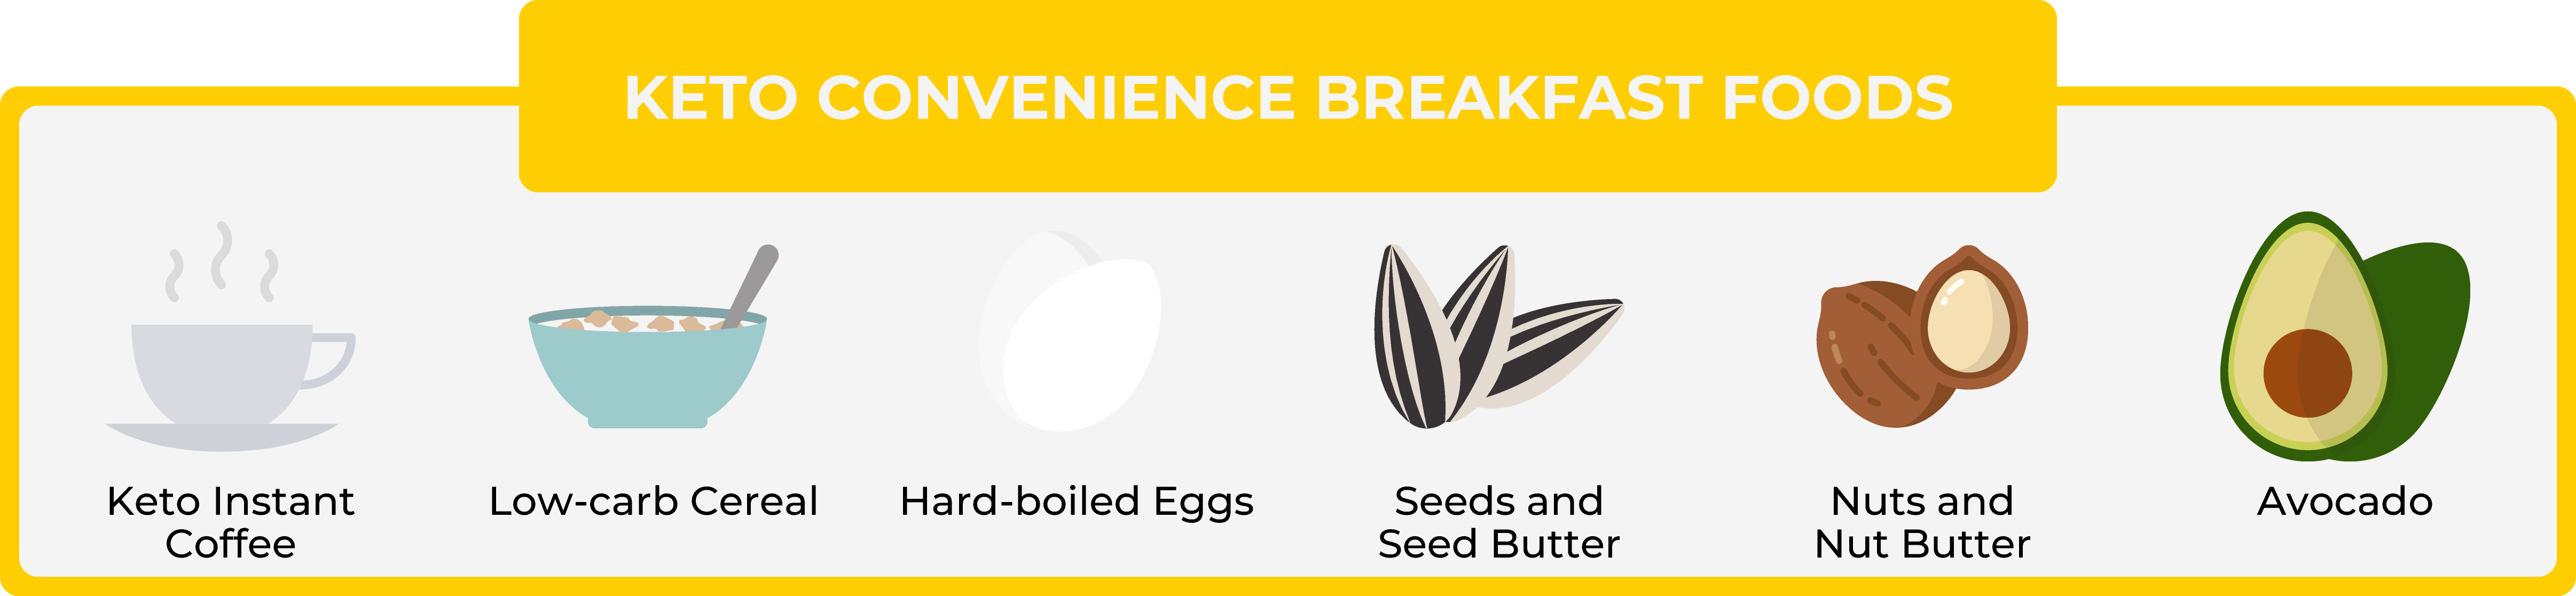 keto-convenience-breakfast-foods.png